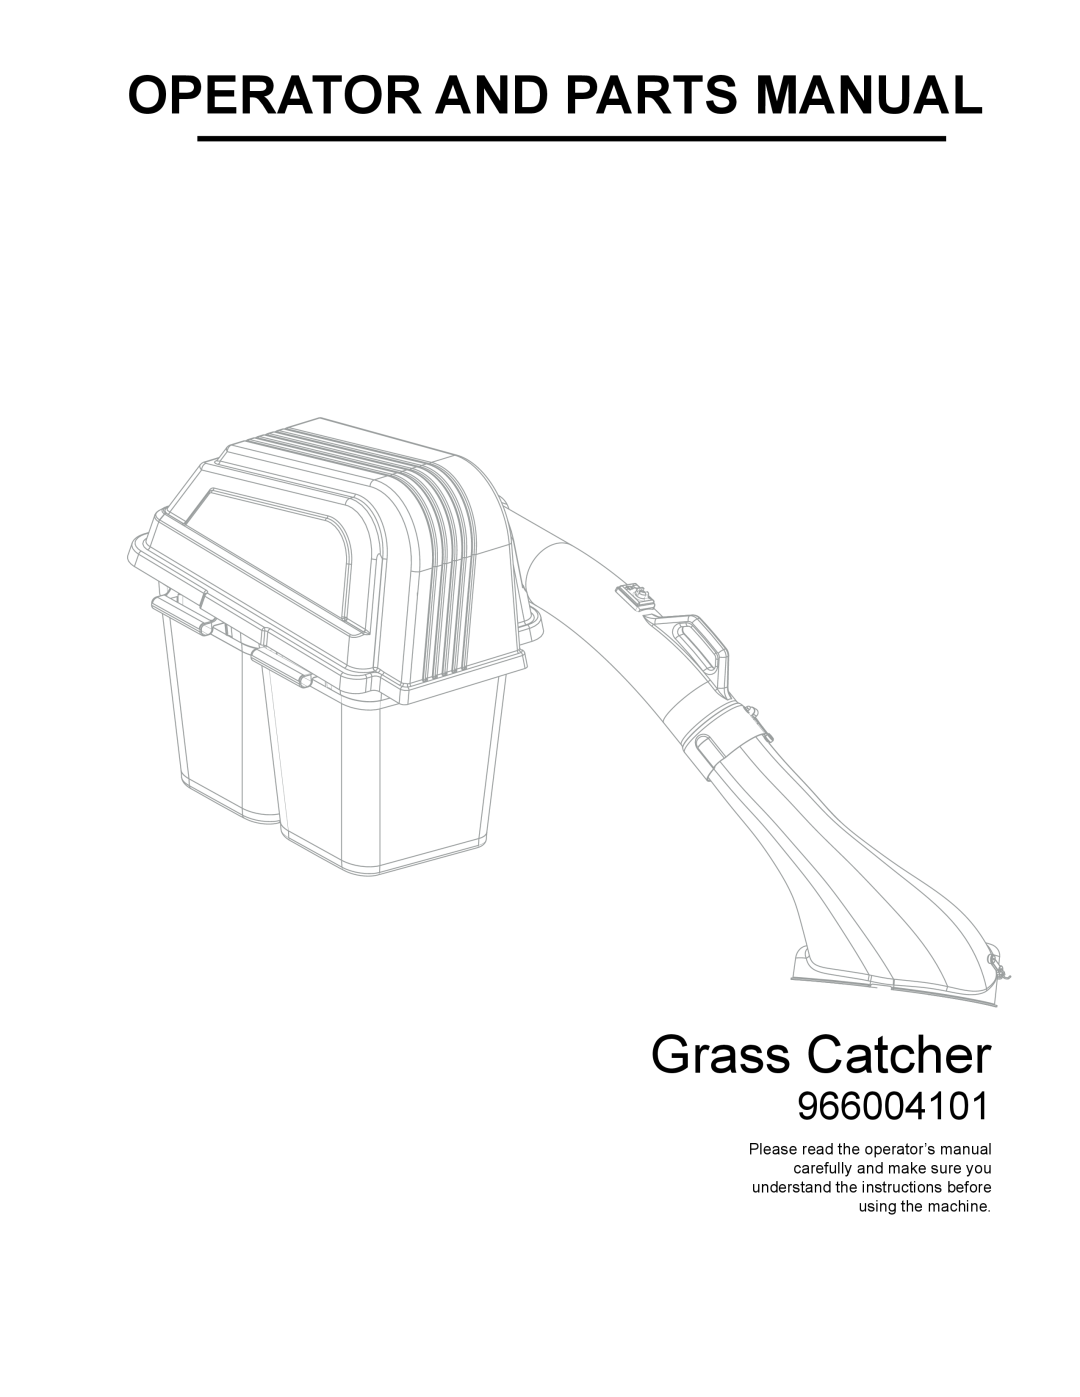 Dixon 966004101 manual Operator And Parts Manual, Grass Catcher 